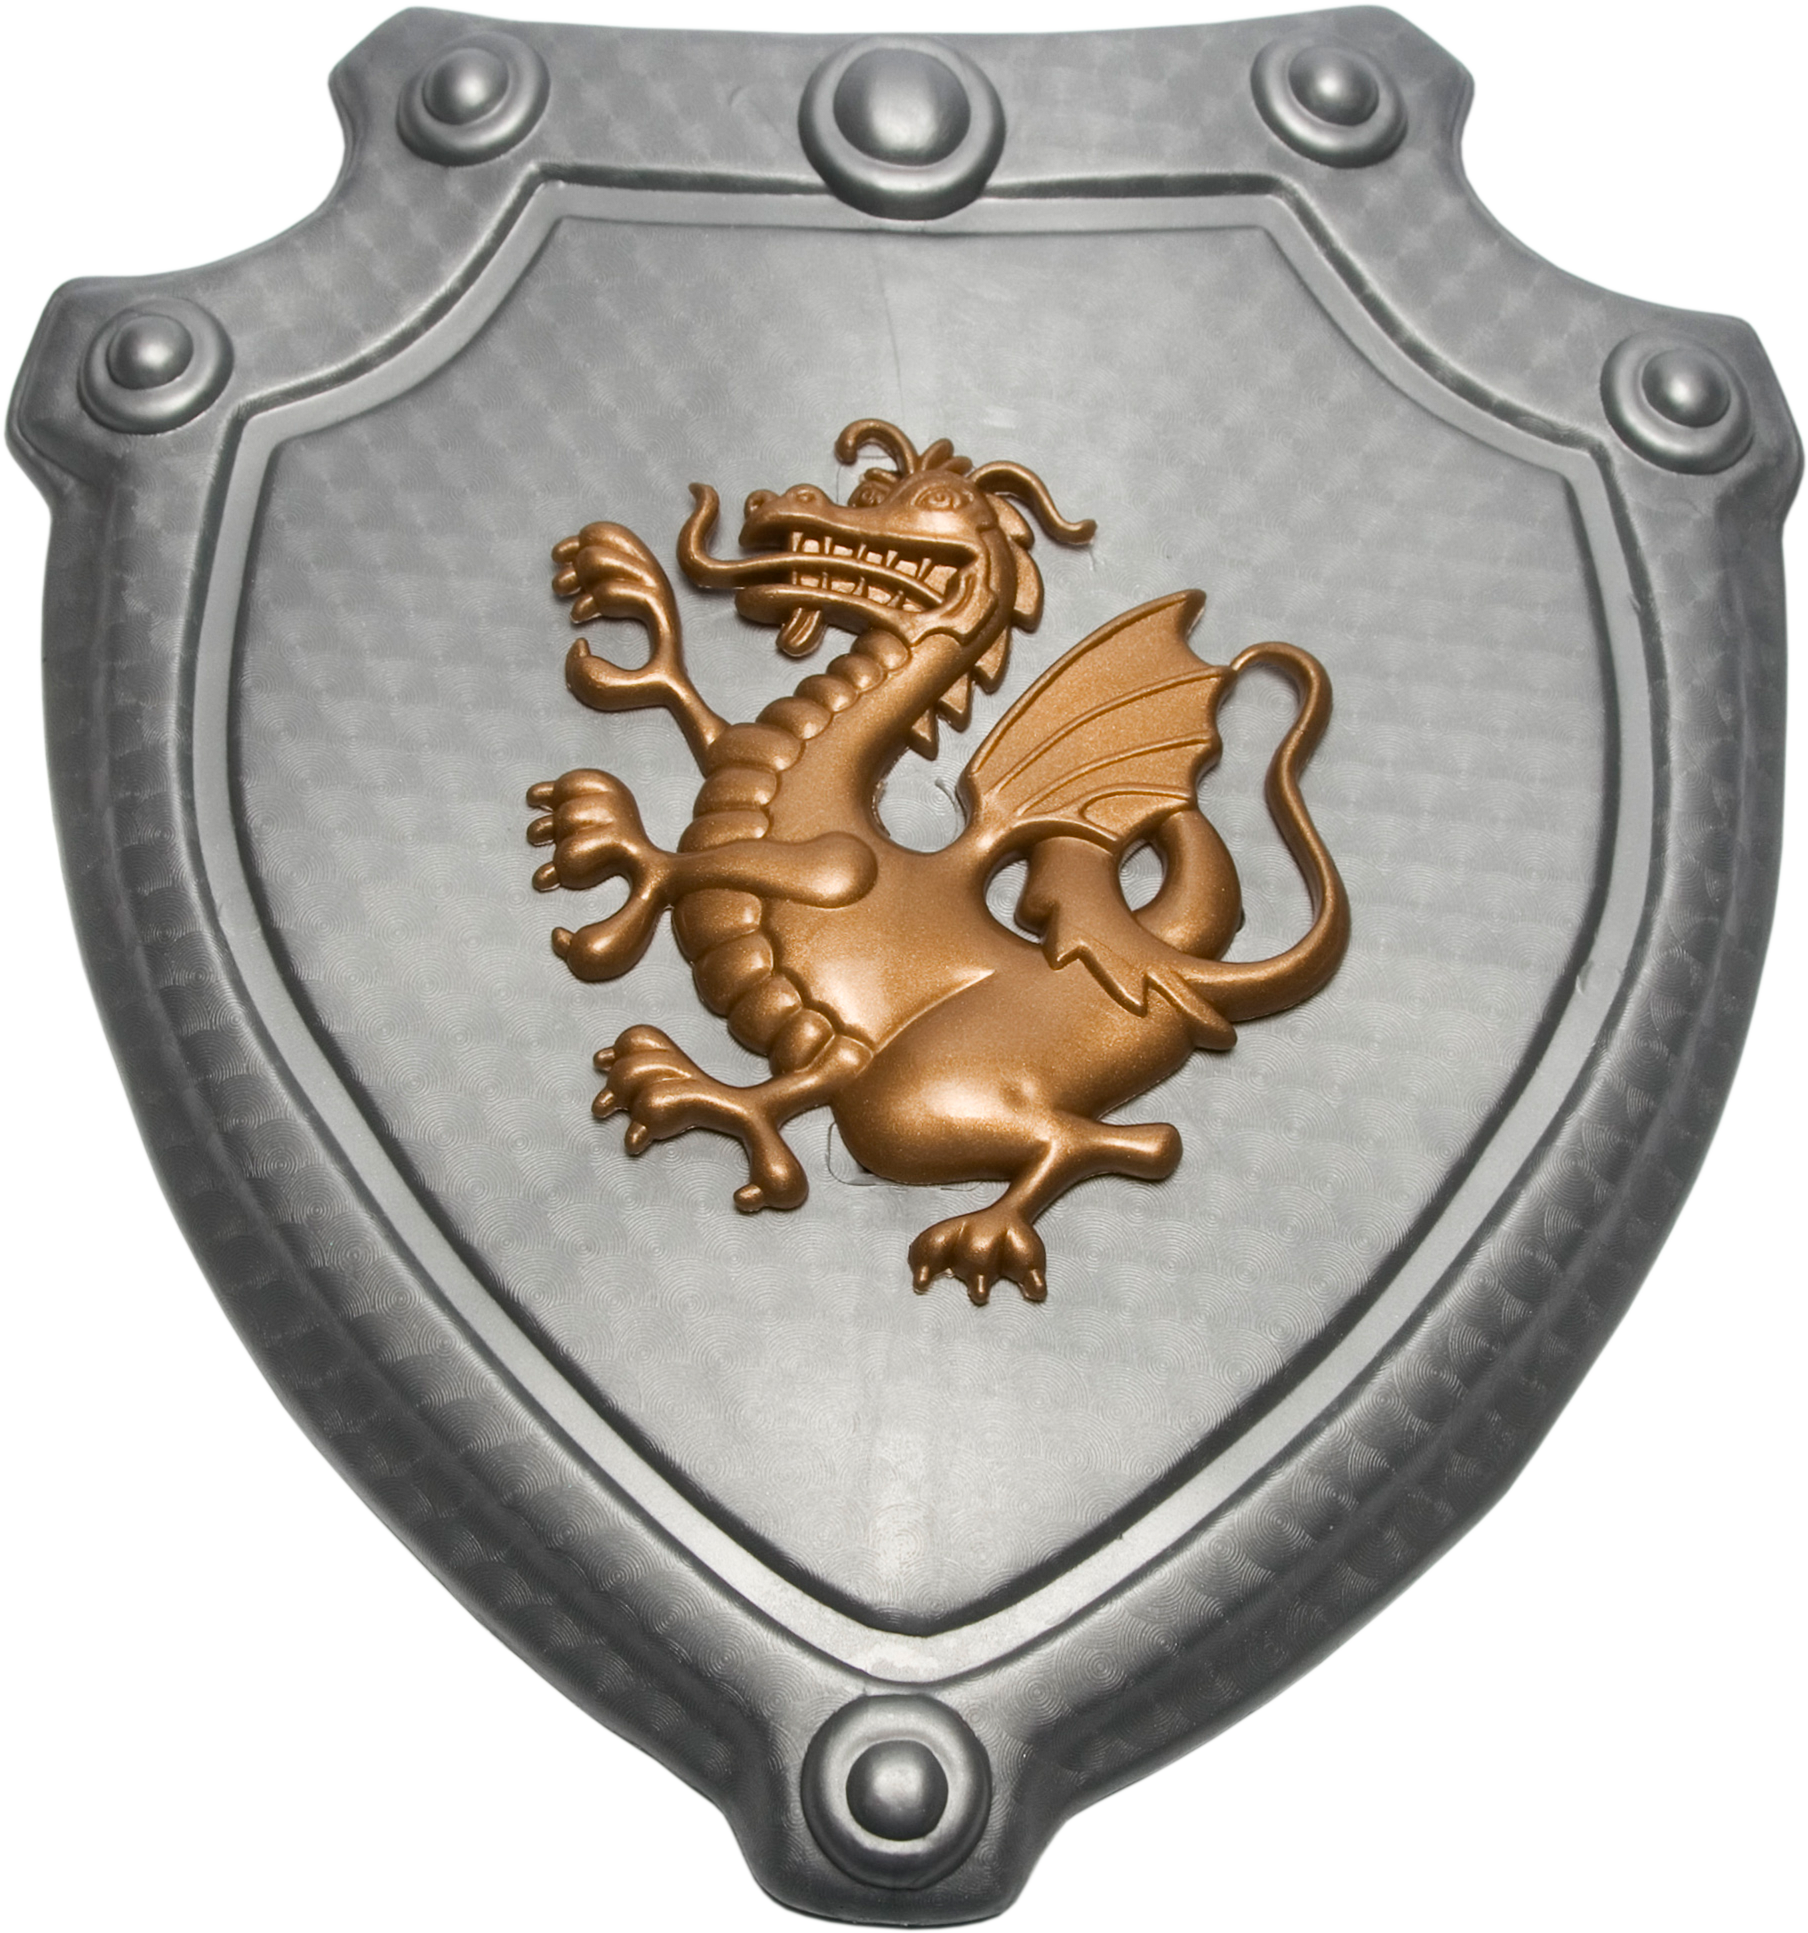 medieval clipart medieval shield